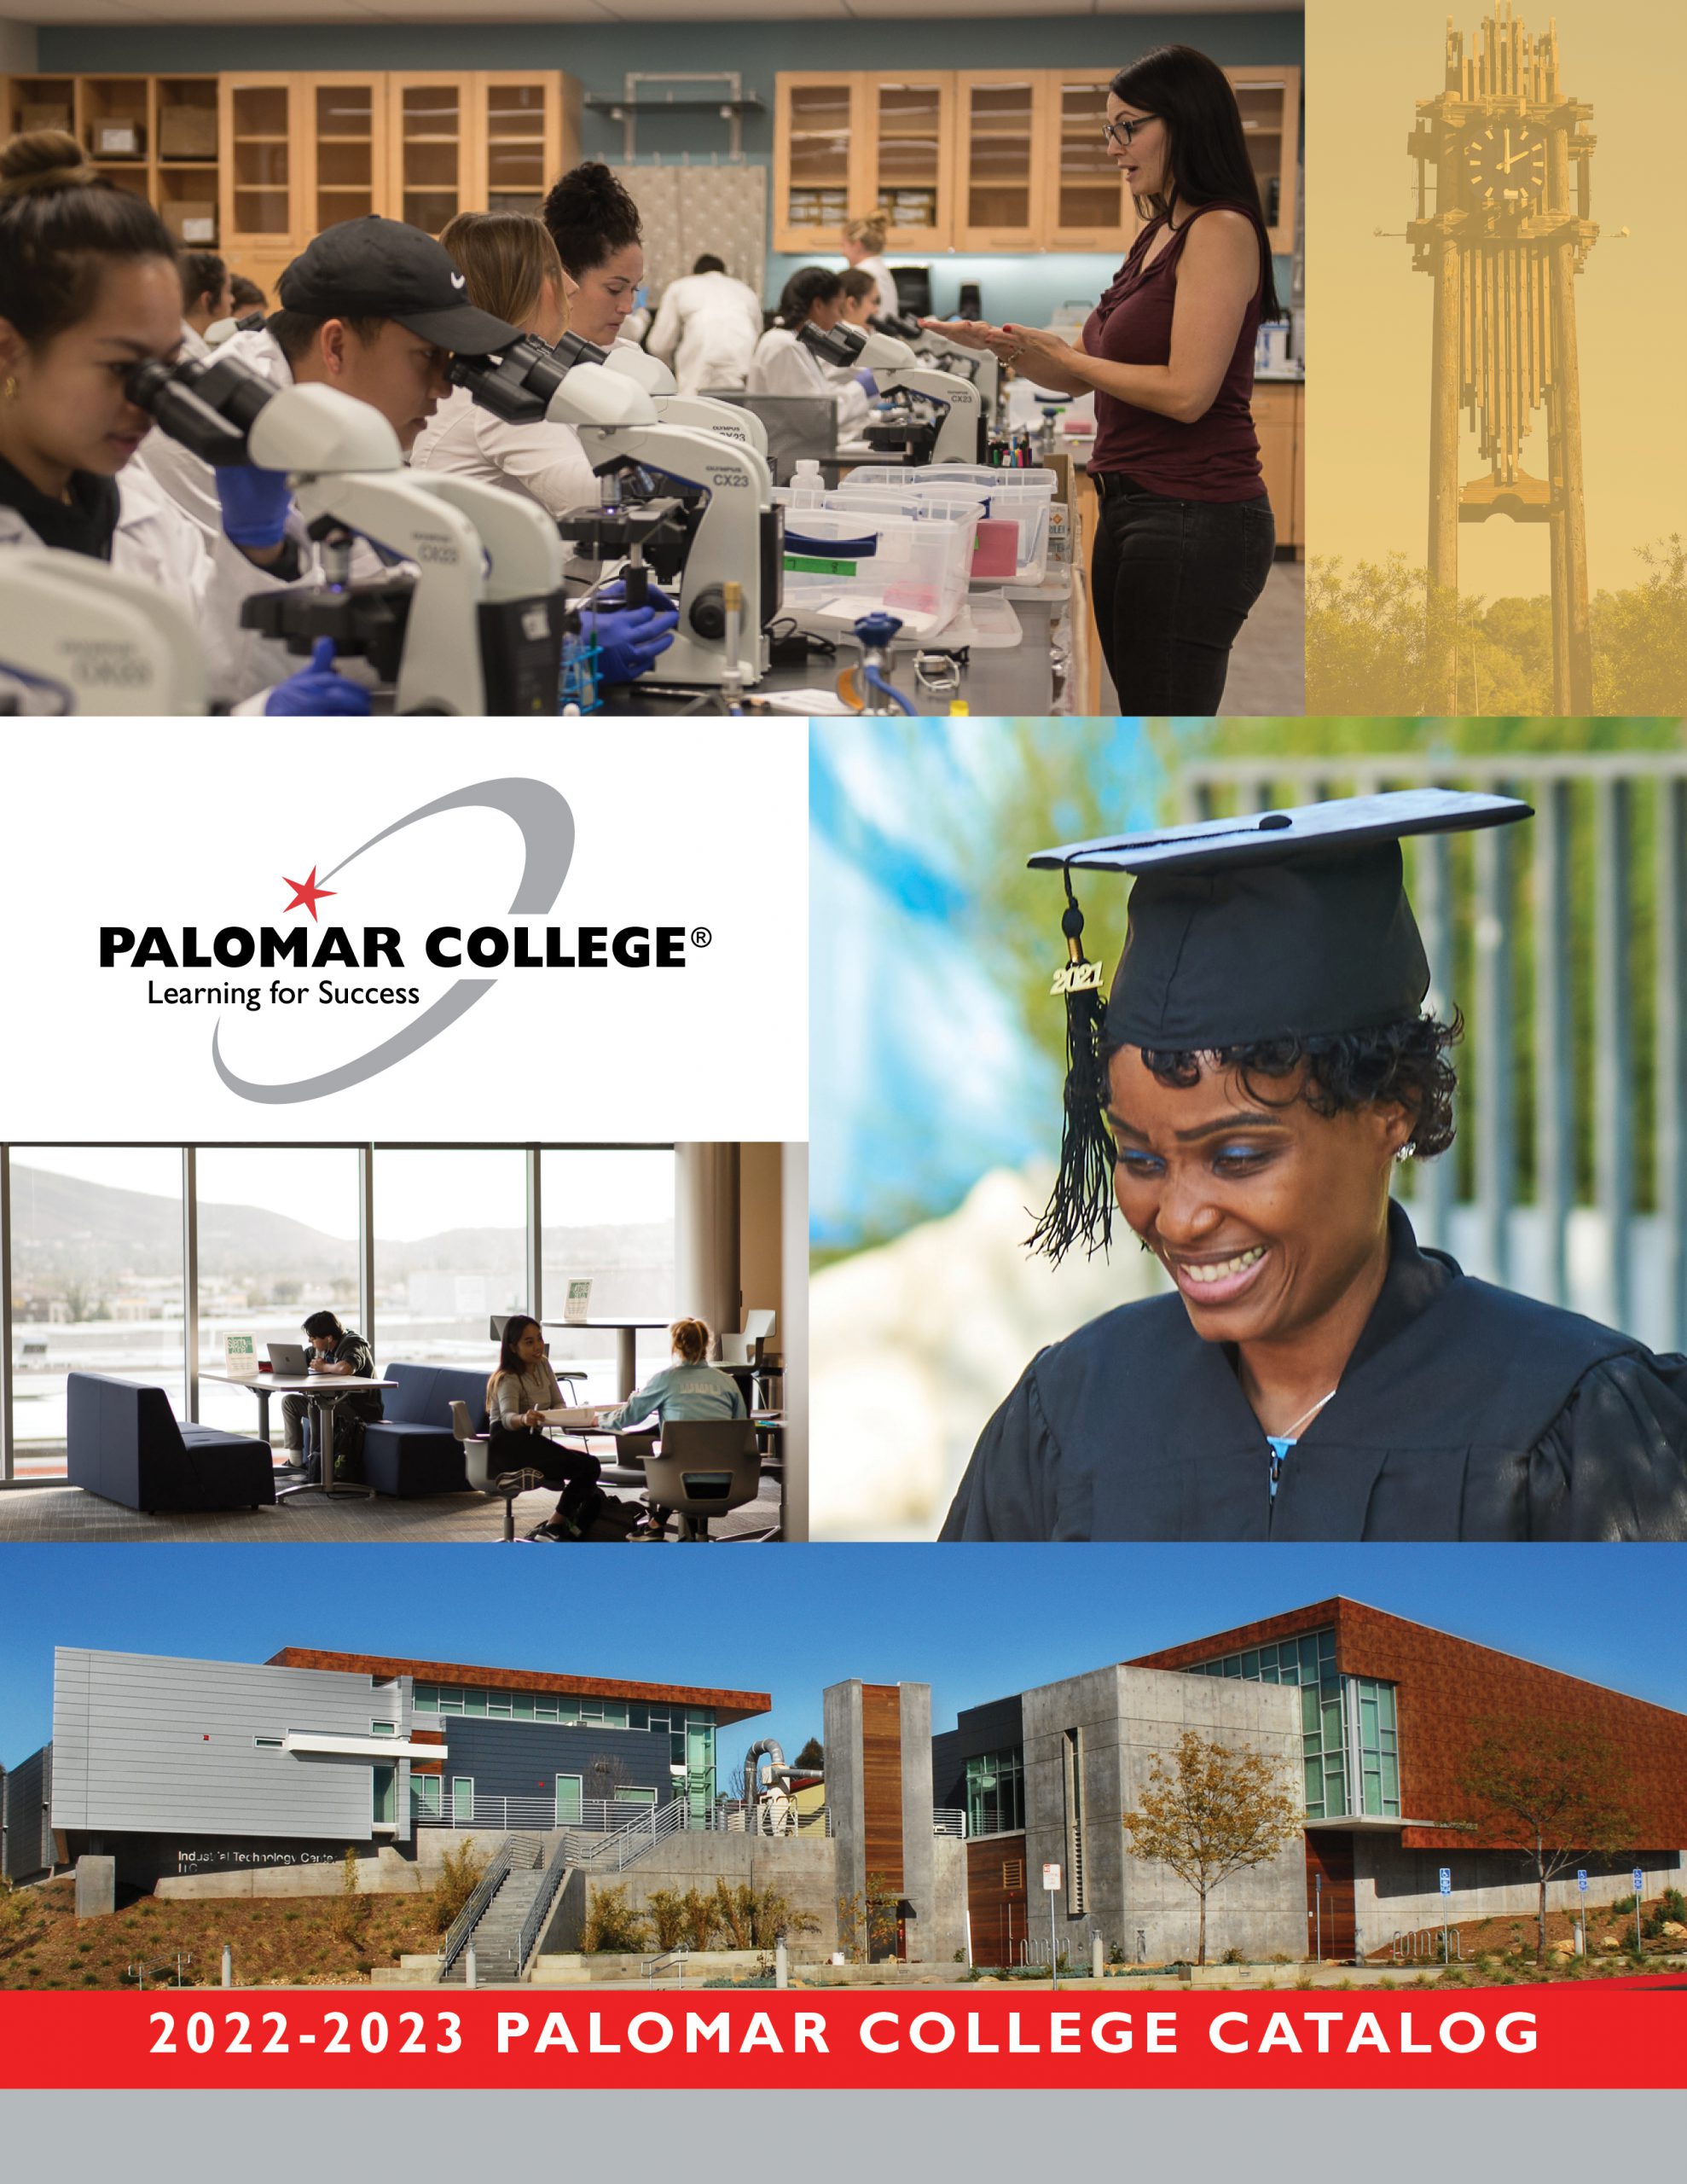 Palomar College's Current Catalog